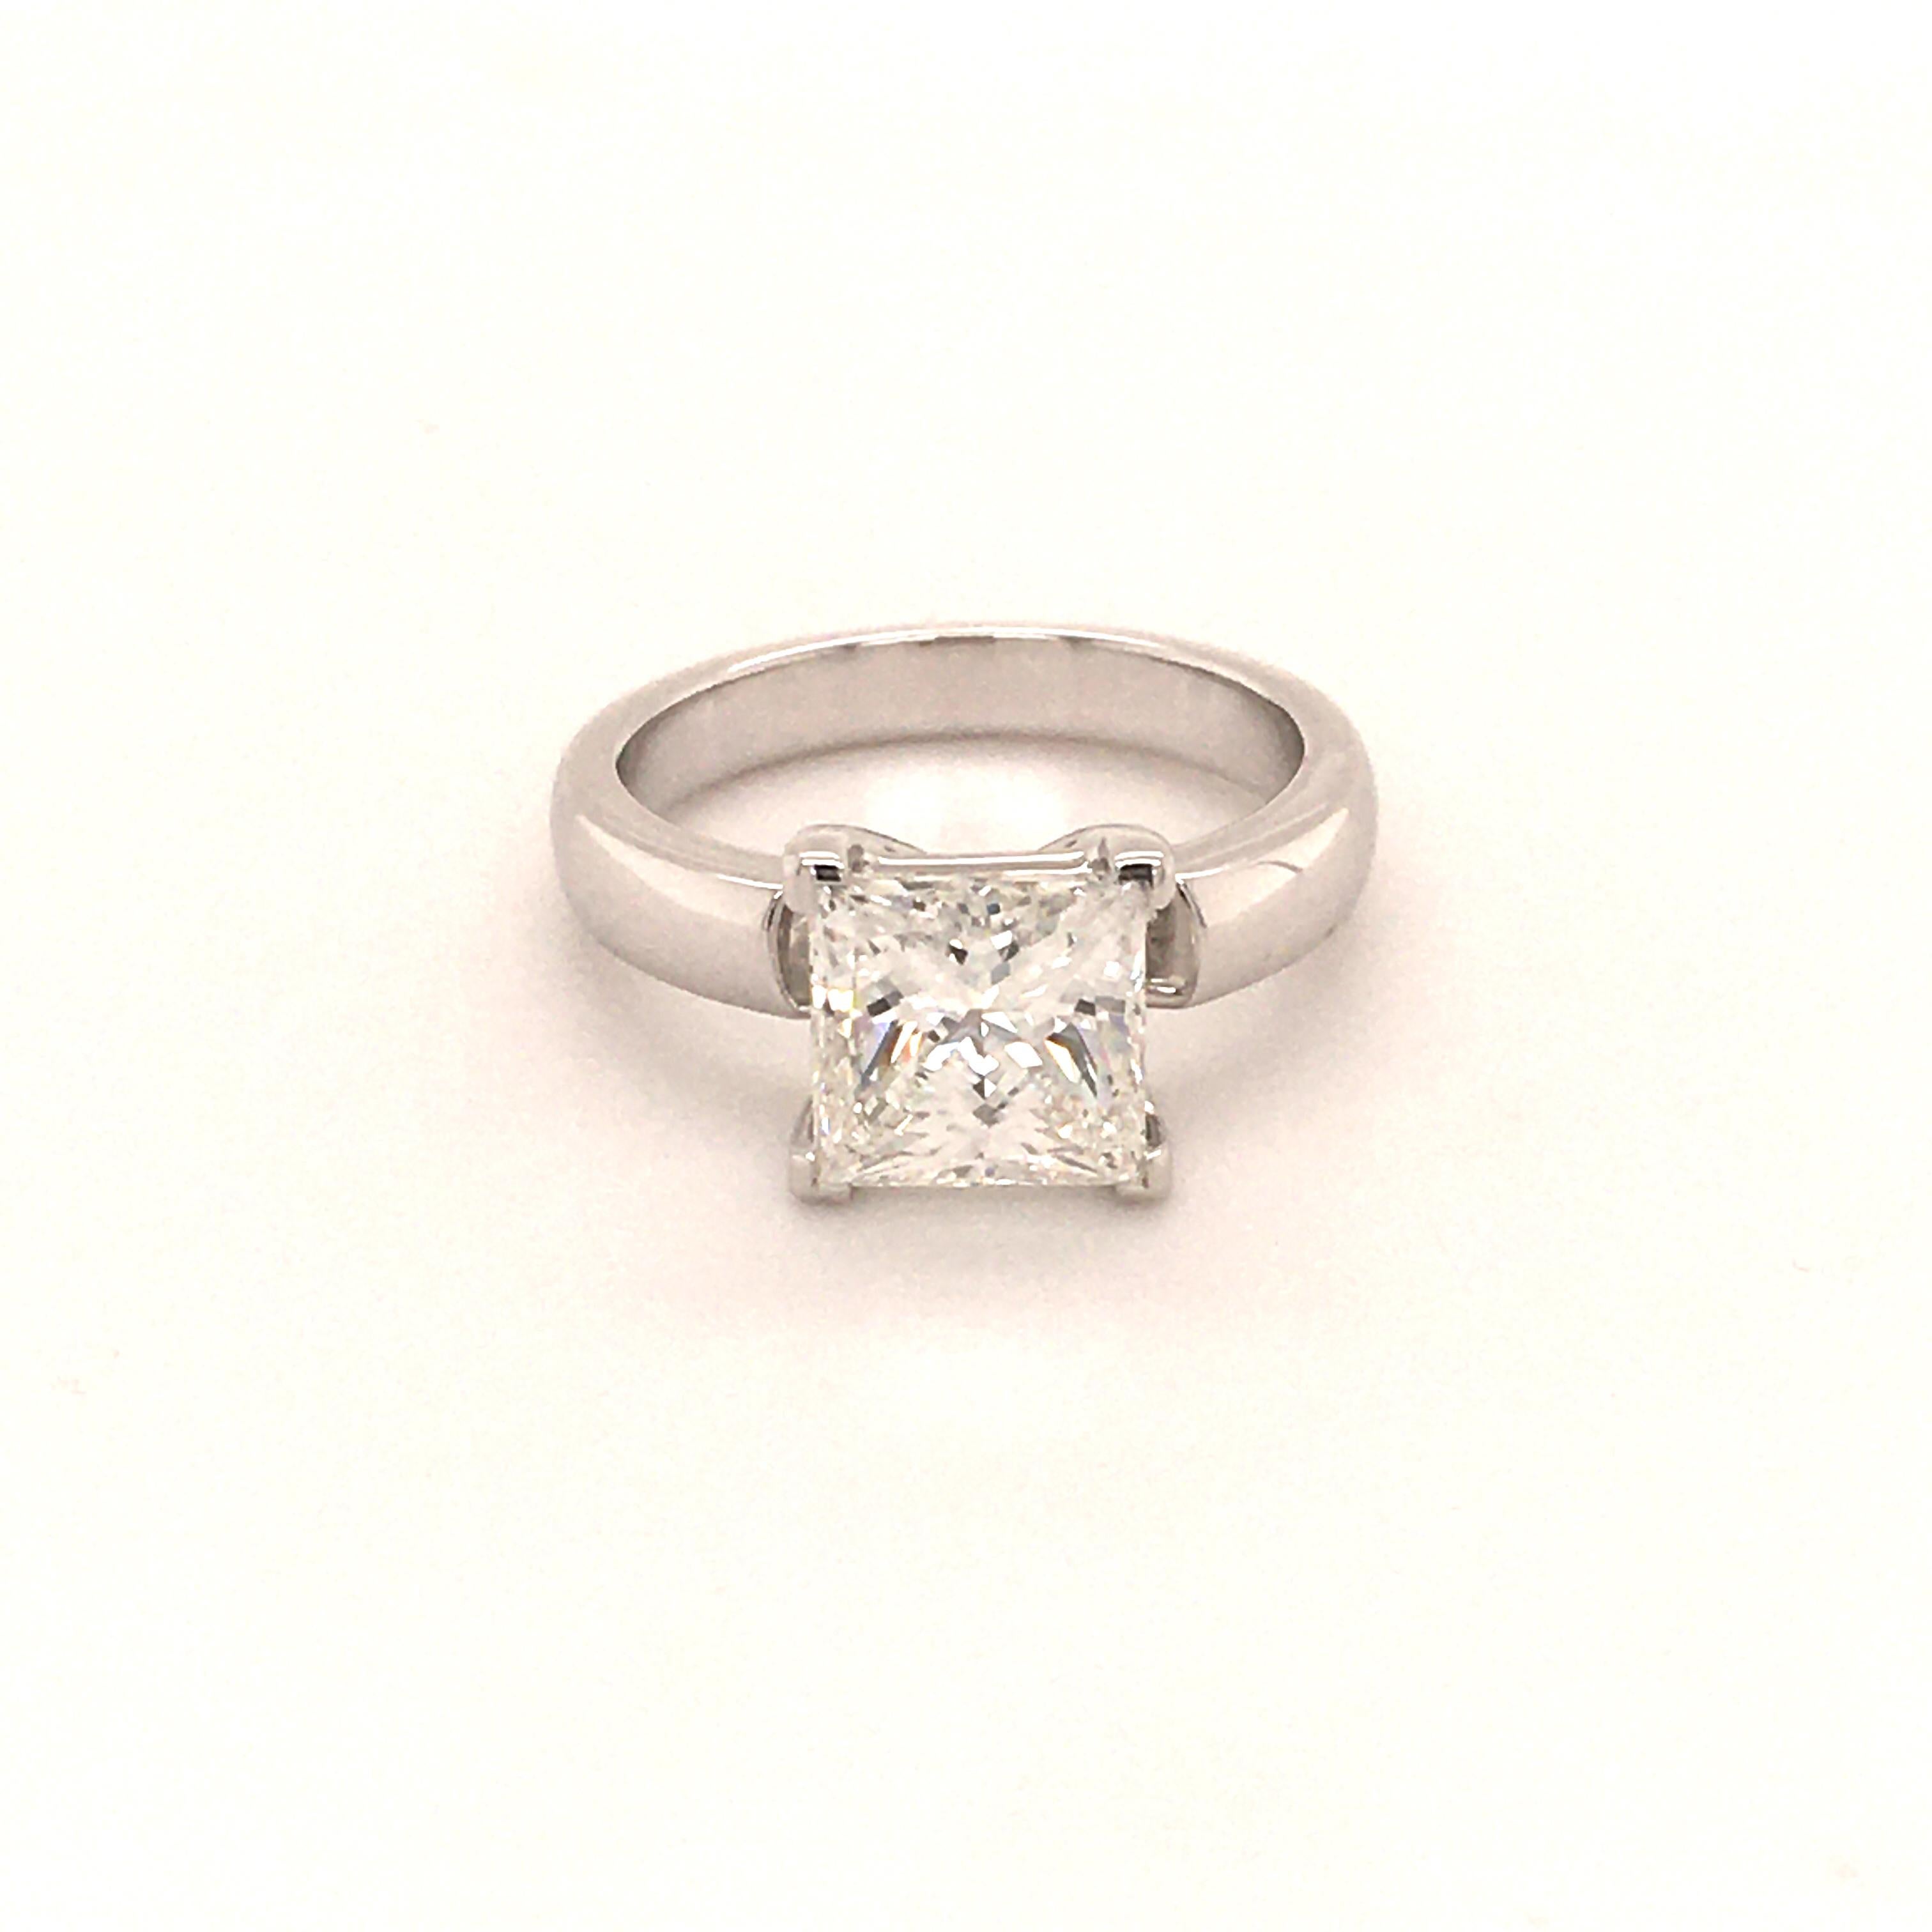 Contemporary 2.03 Carat Princess Cut Diamond Ring in 18 Karat White Gold by Bucherer